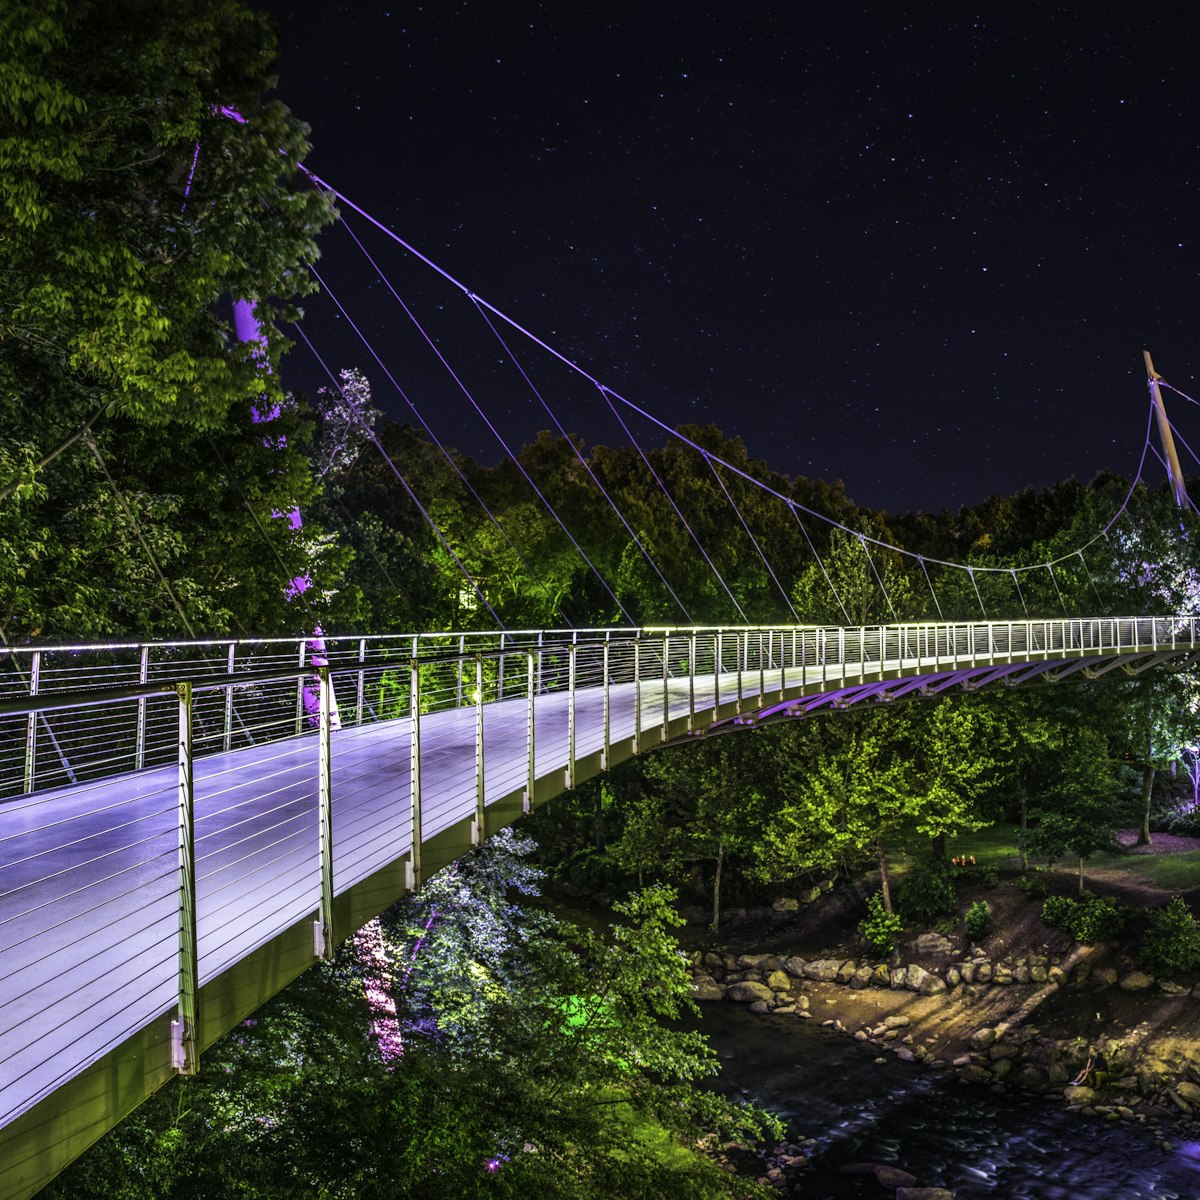 Illuminated Liberty Bridge in Falls Park downtown Greenville South Carolina on a starry night.